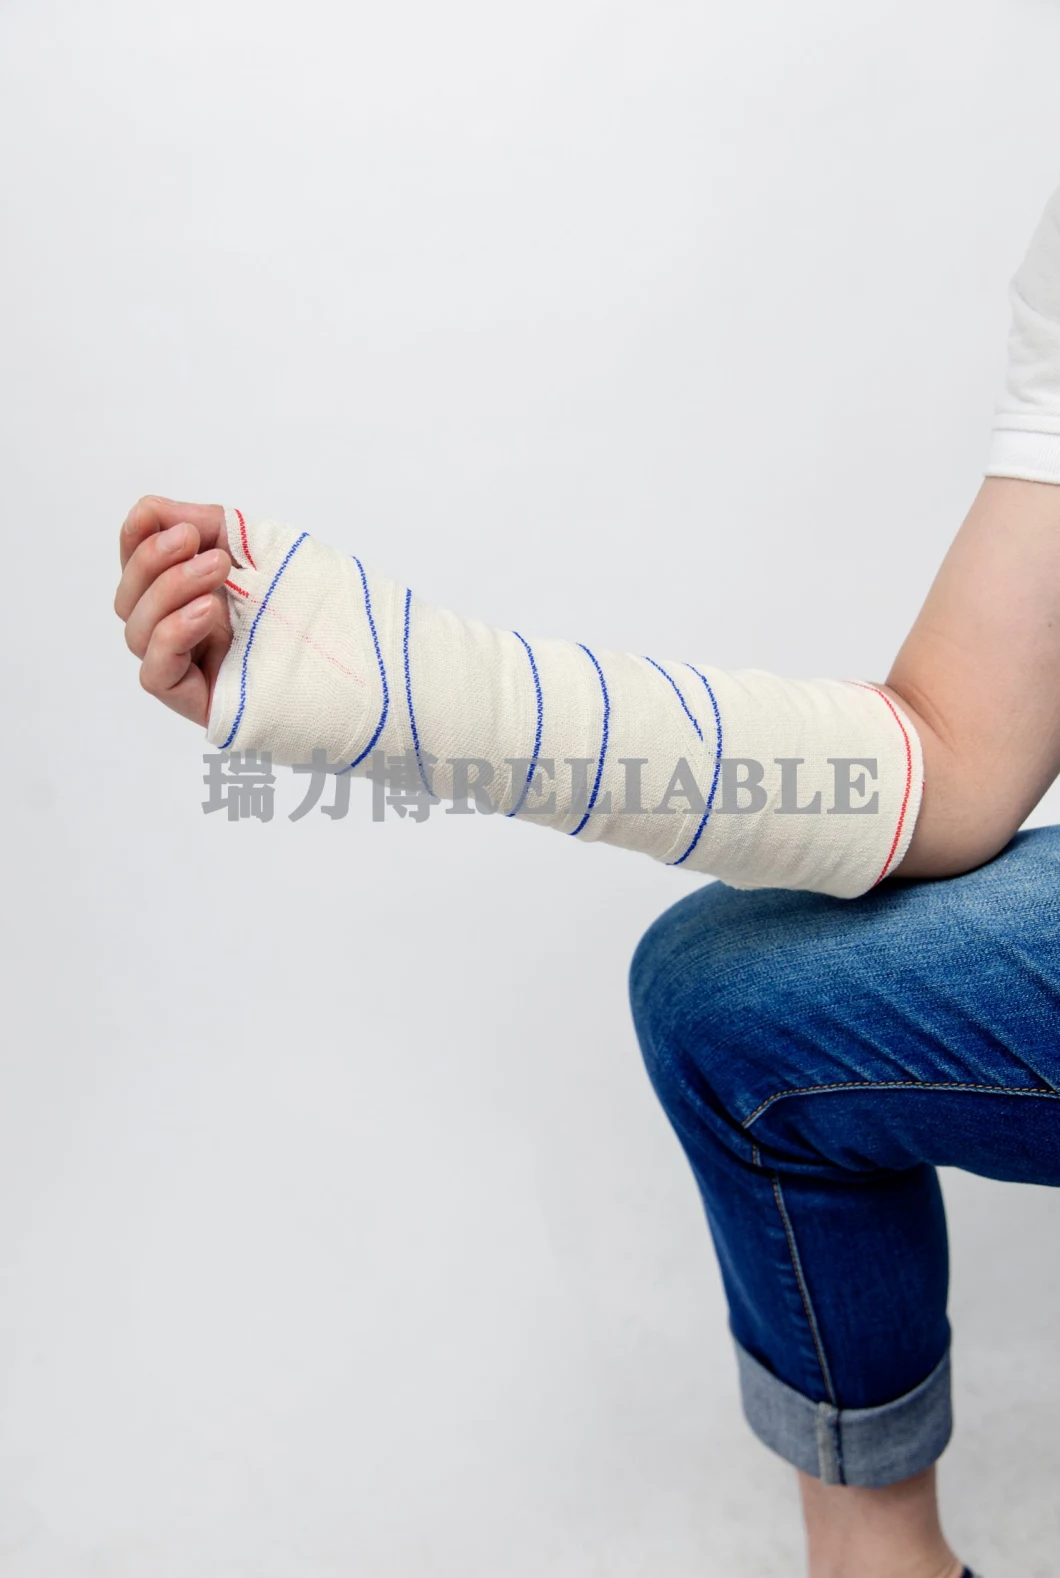 Leg Splint Medical Product Fiberglass Splint